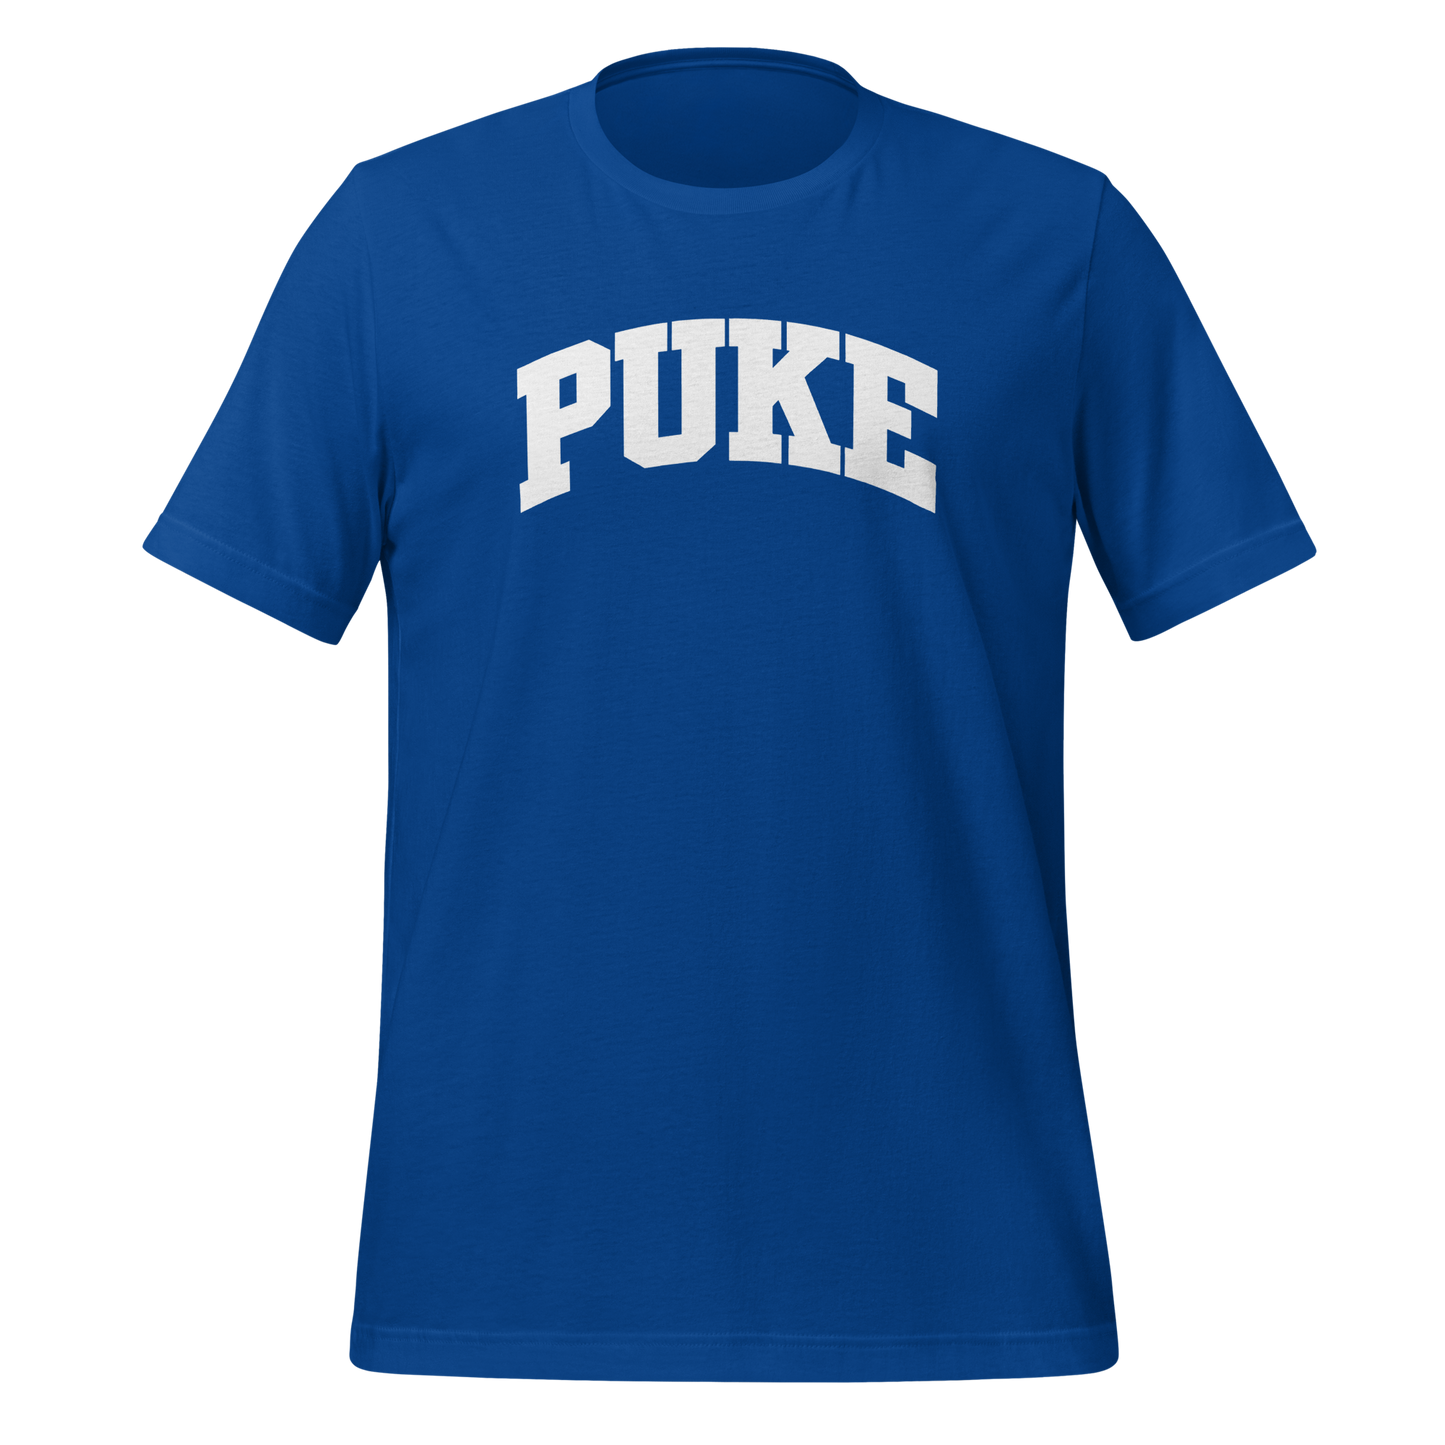 Puke classic logo t-shirt